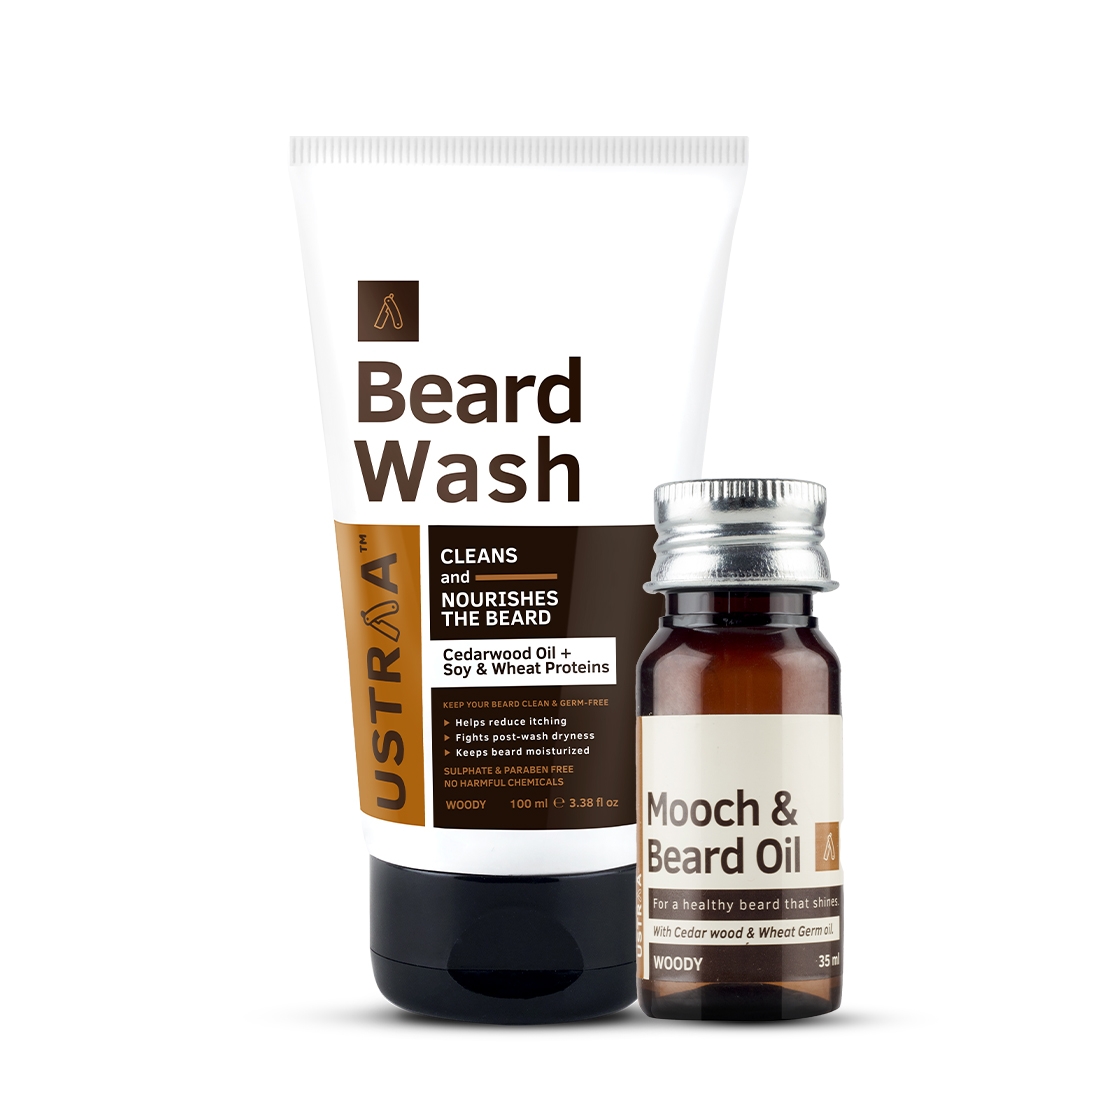 Ustraa Beard Oil Woody - 35ml And Beard Wash Woody - 100ml